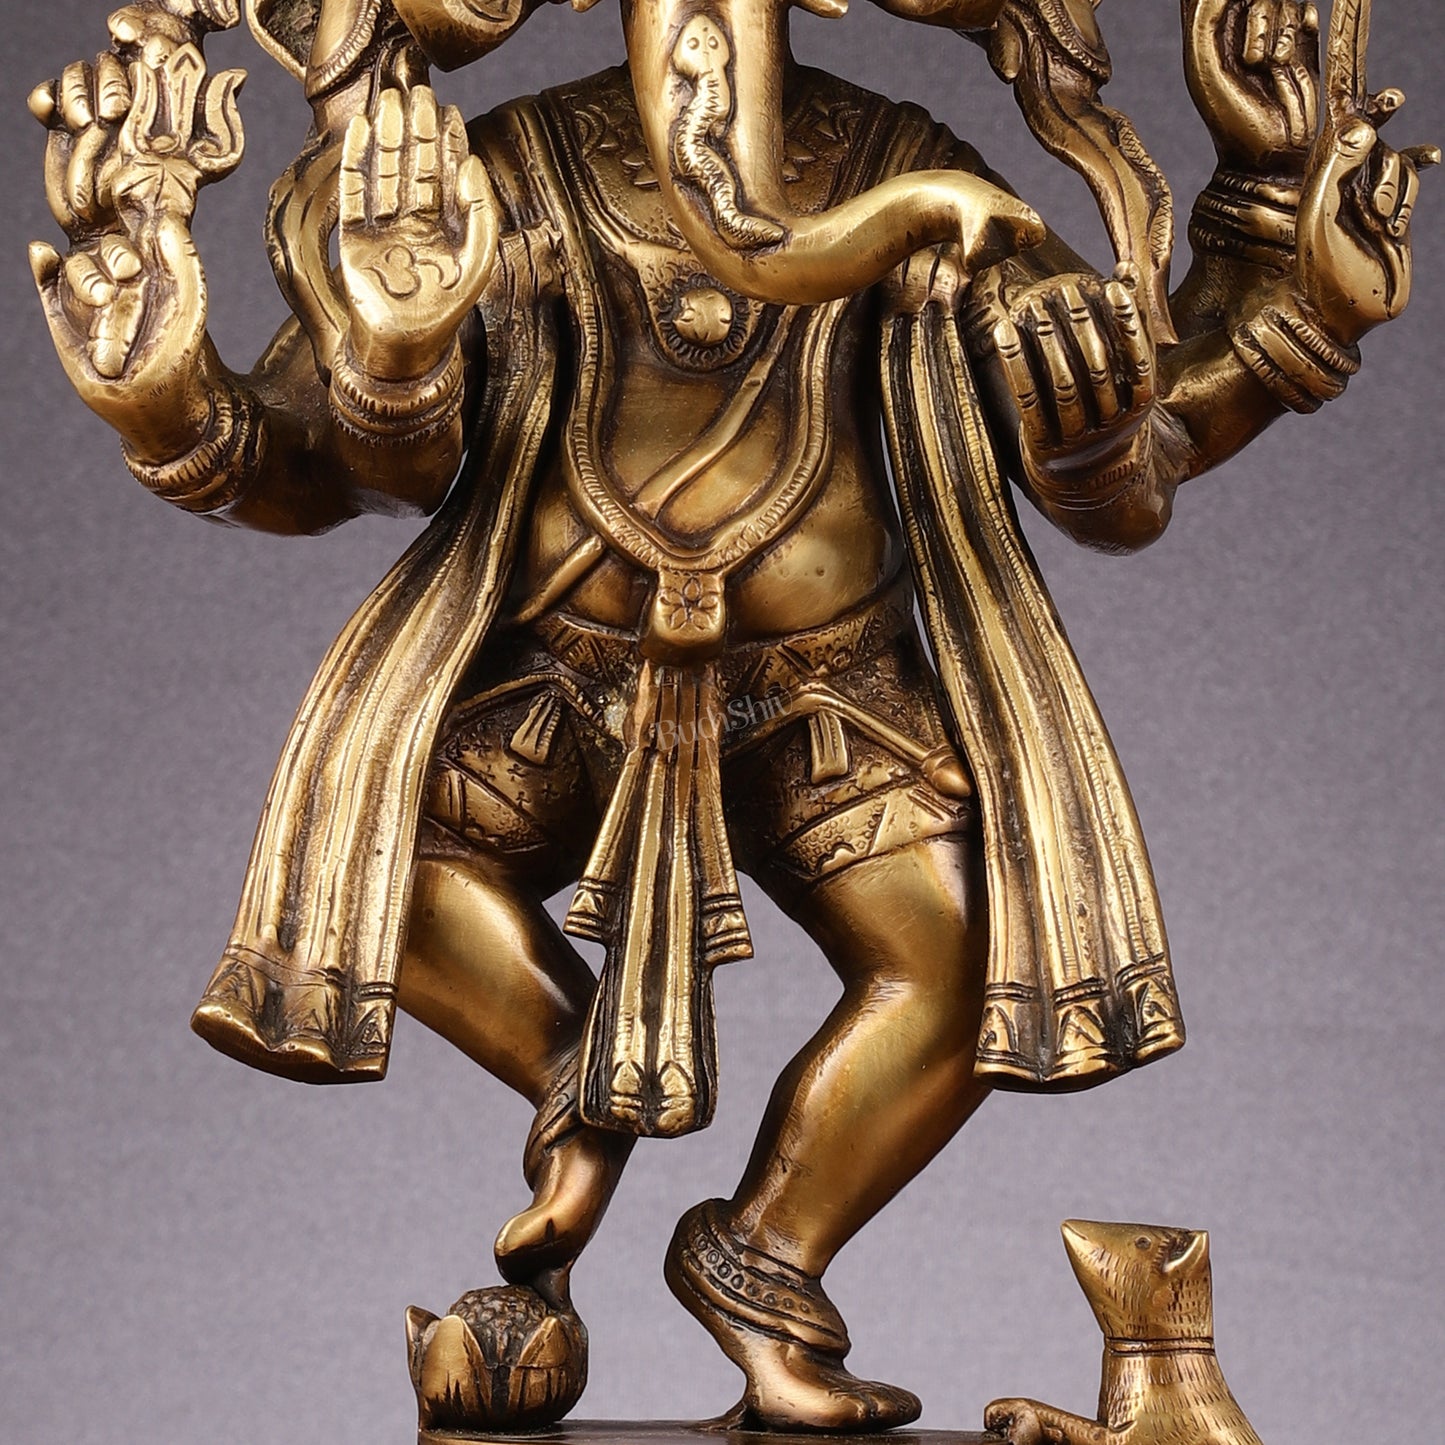 Brass Dancing Panchmukhi Ganesha Statue - 15 Inch tall